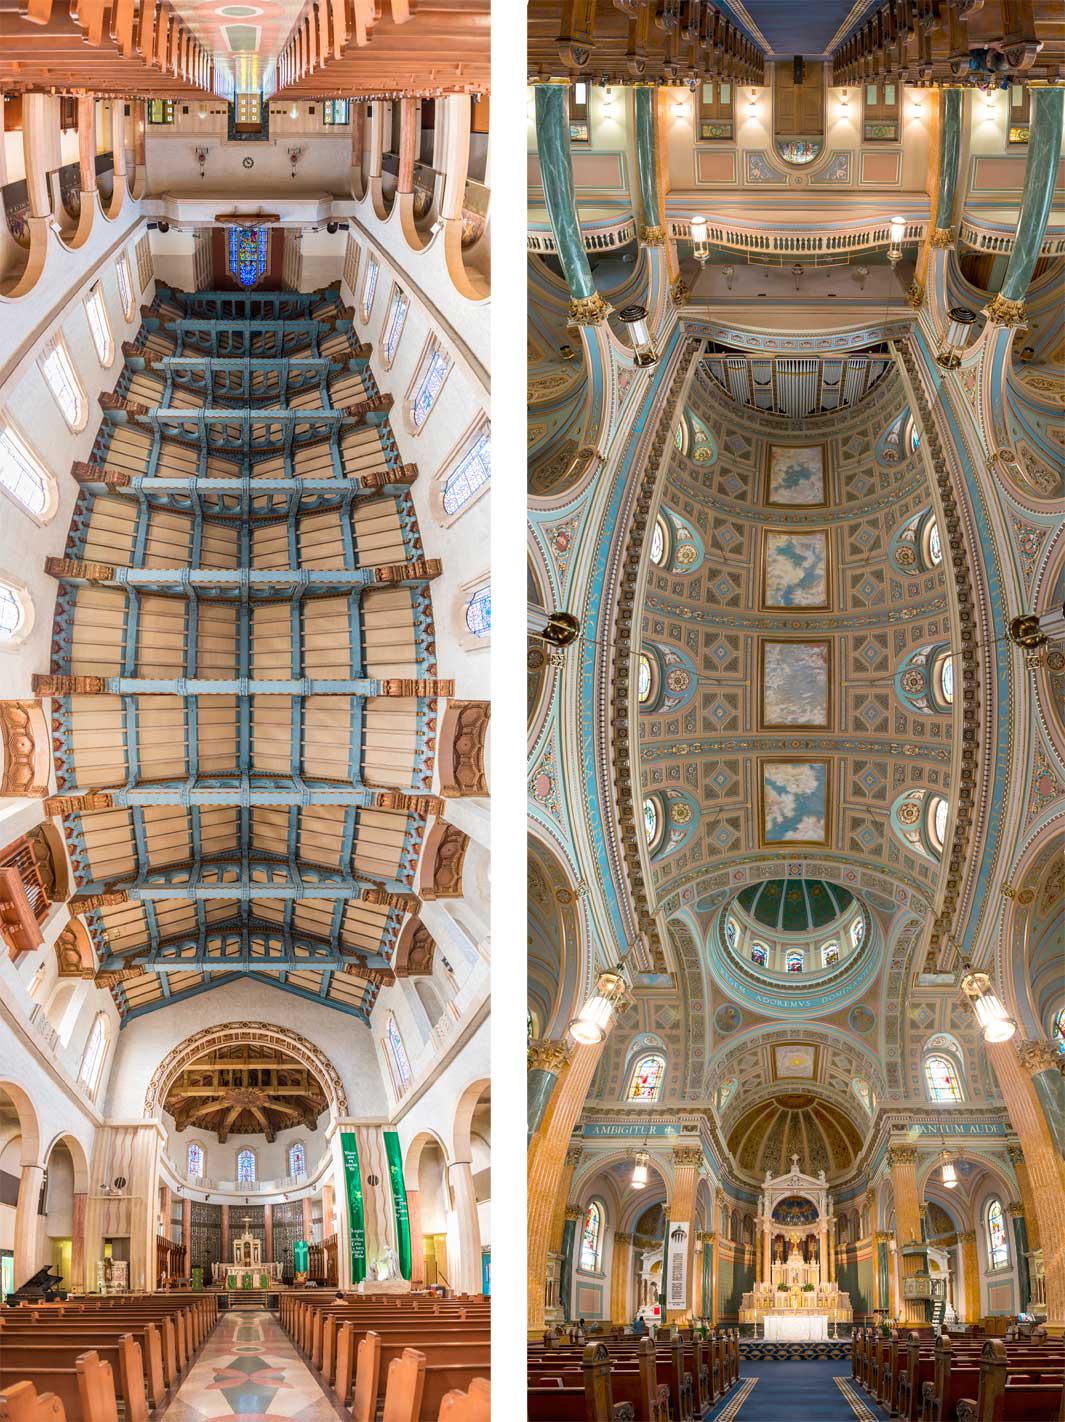 Richard Silver: “Vertical Churches” captures churches from altar to entrance (PHOTOS).